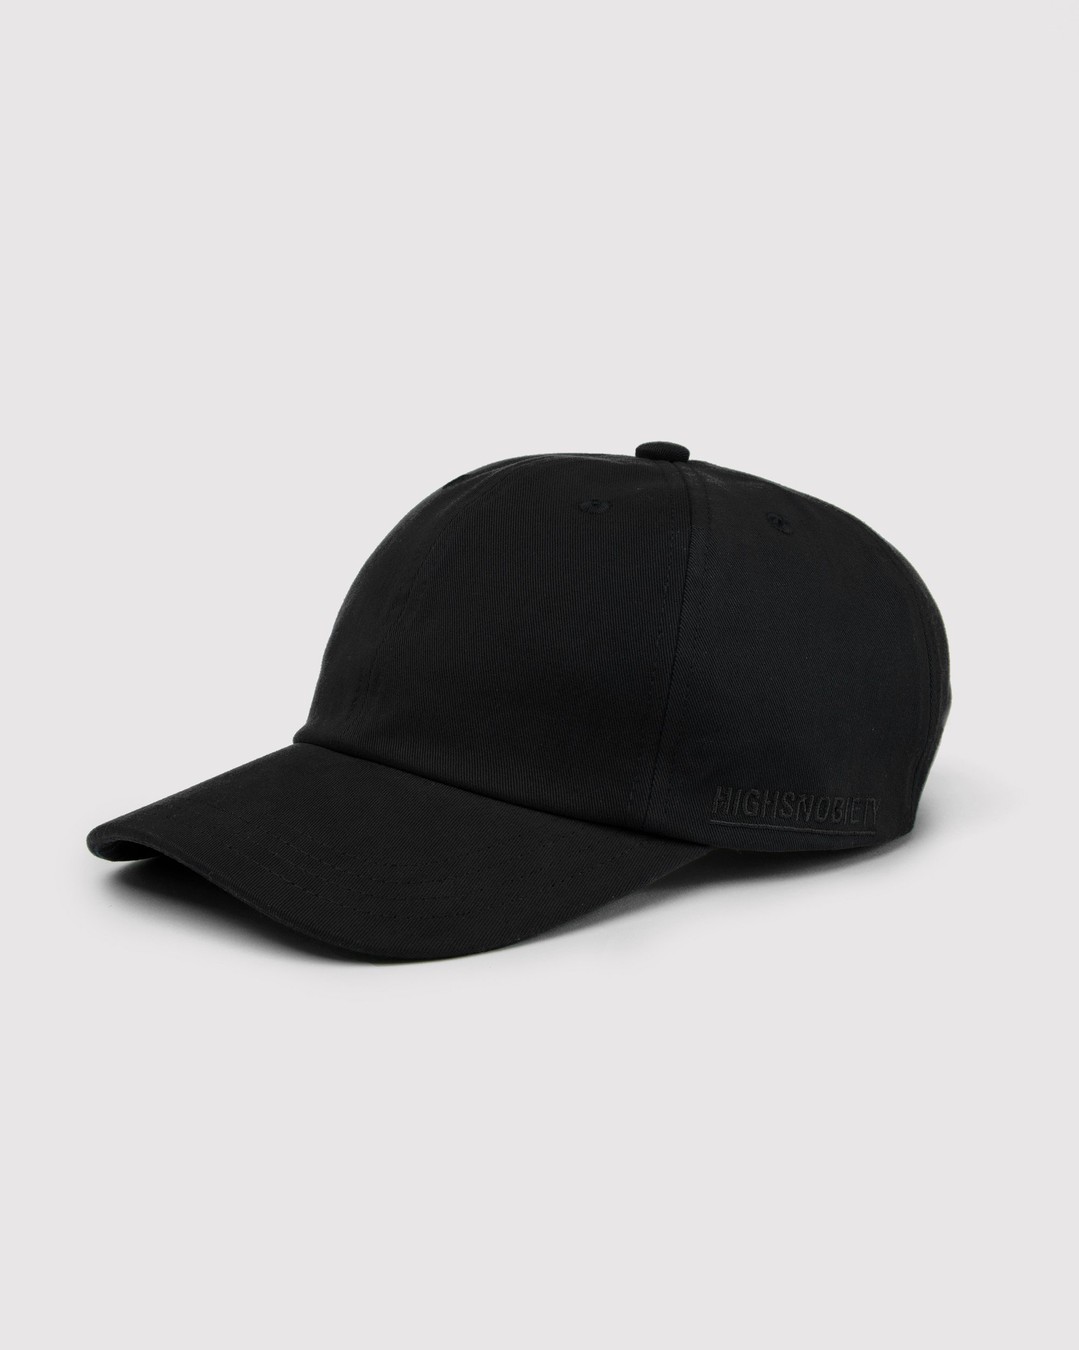 Highsnobiety – Staples Cap Black - Caps - Black - Image 1